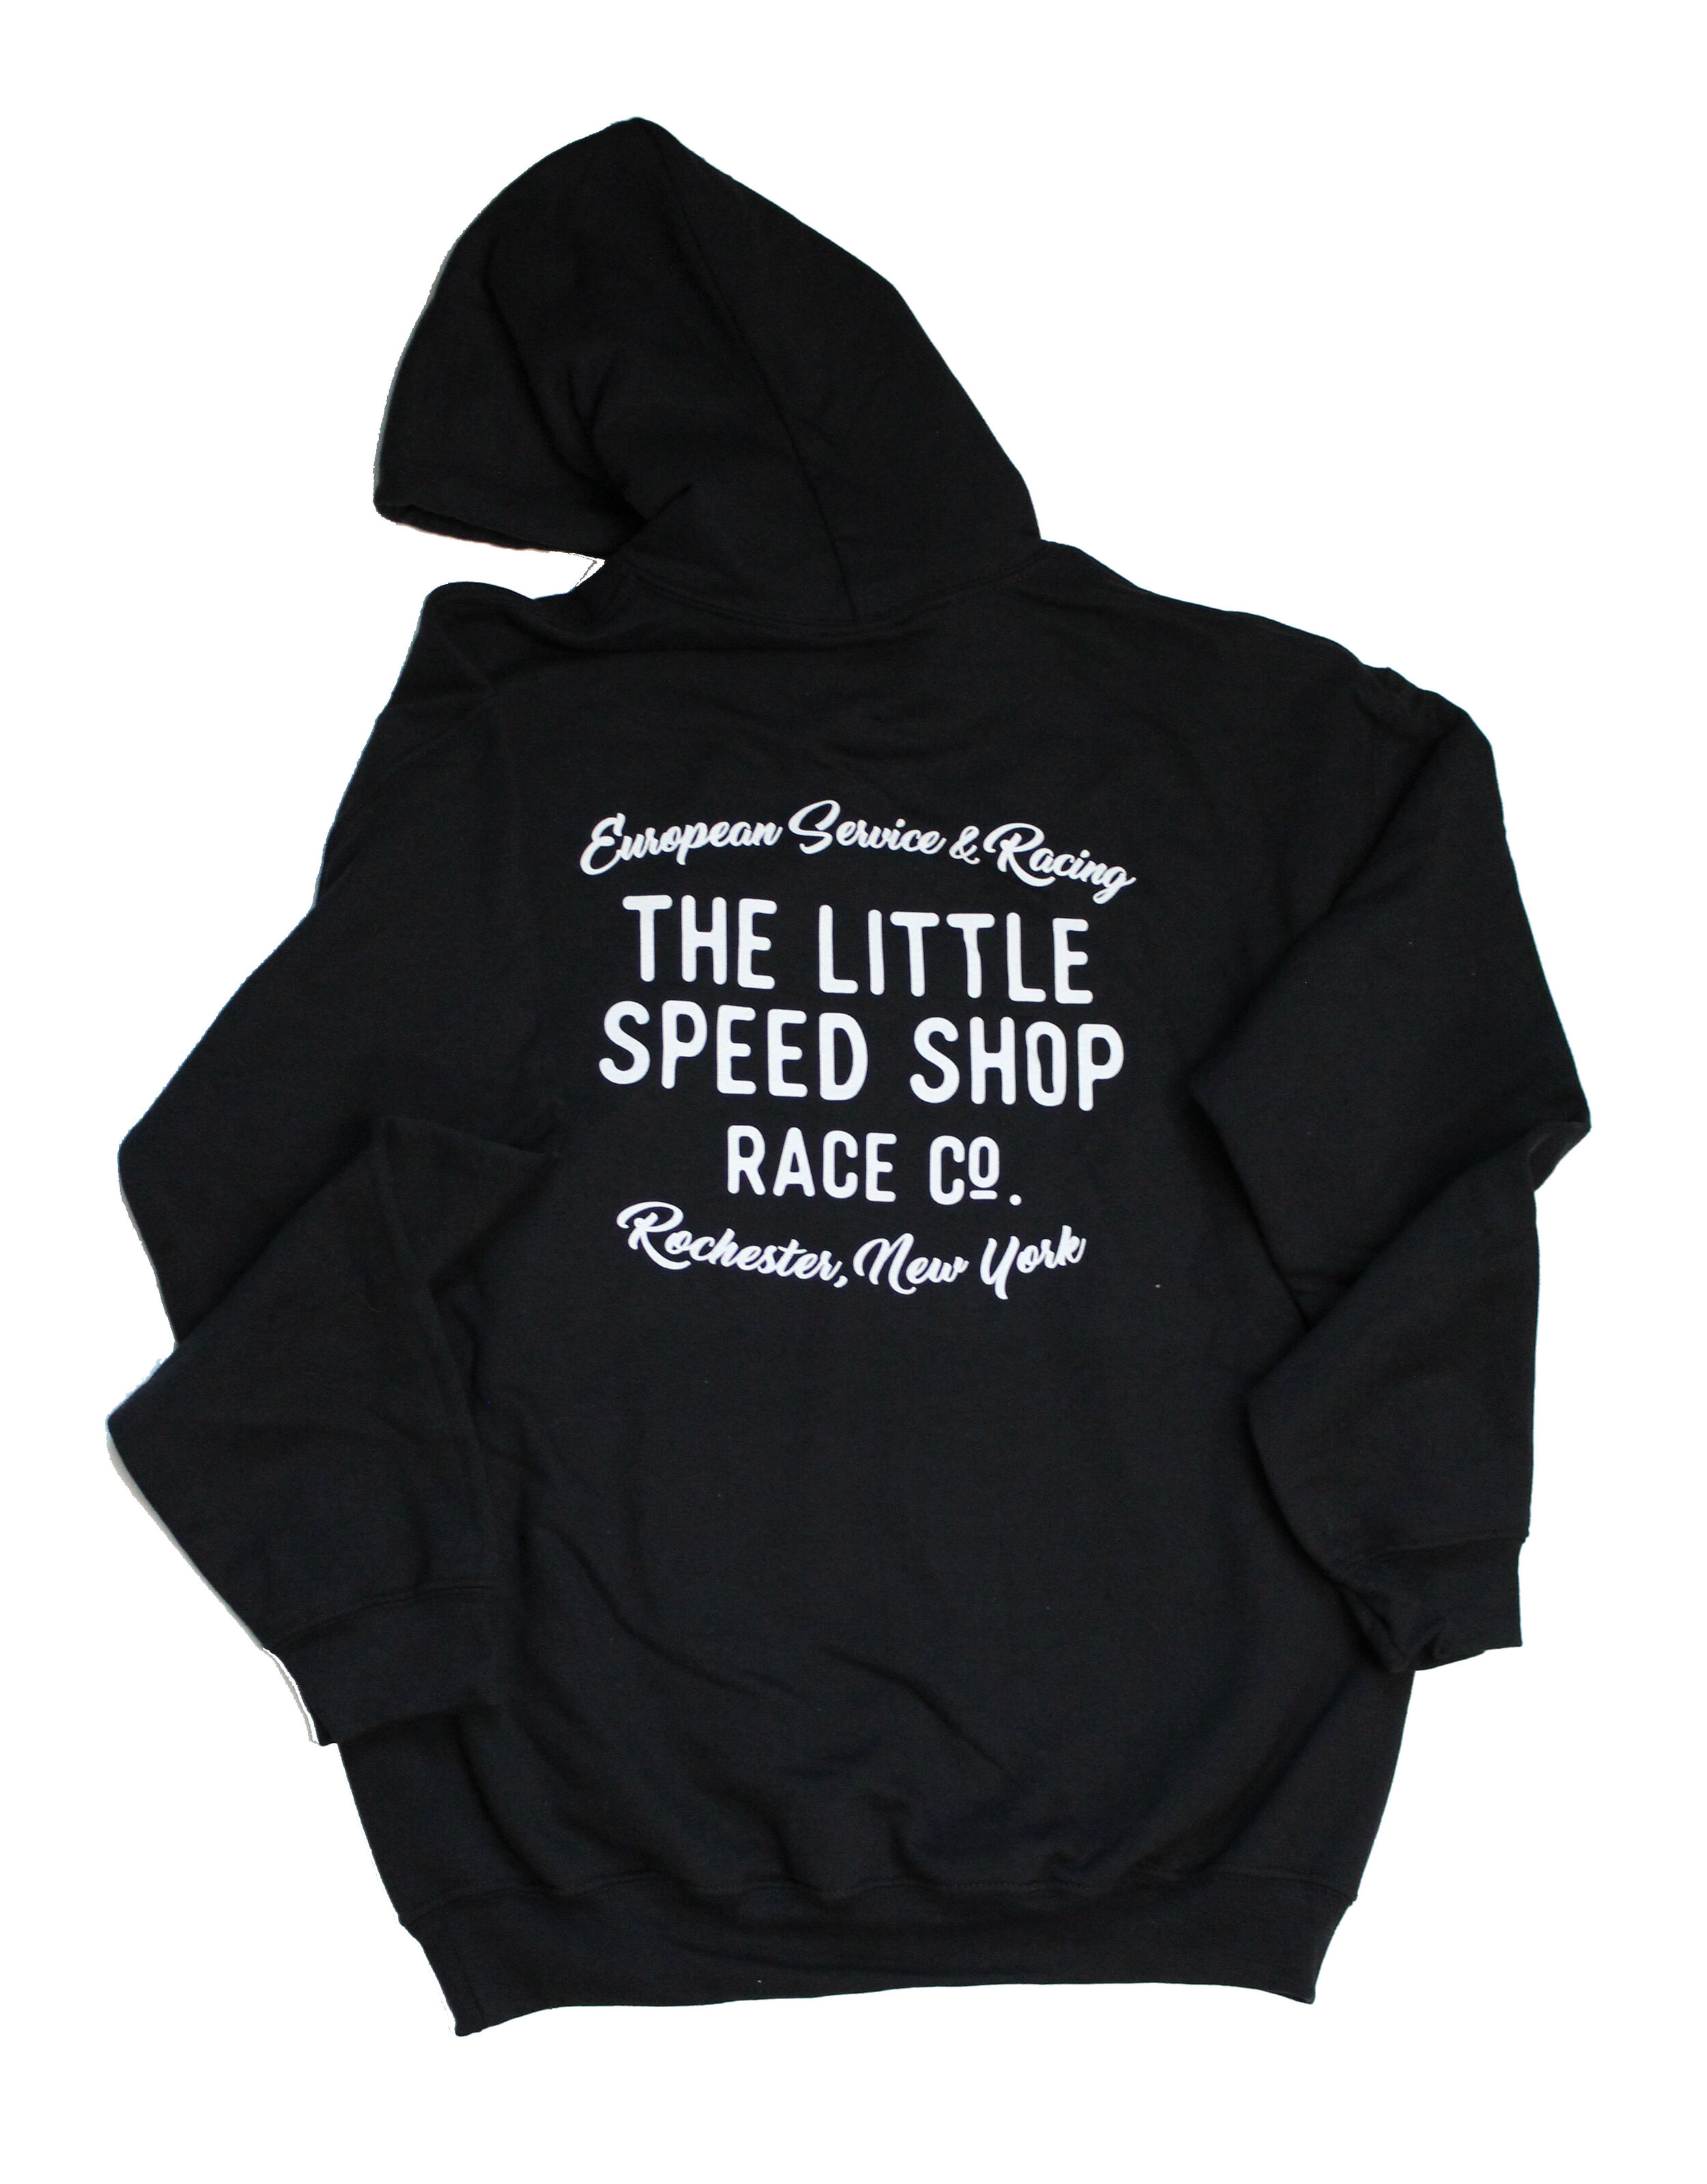 TLSS Retro Shop Hoodie — The Little Speed Shop